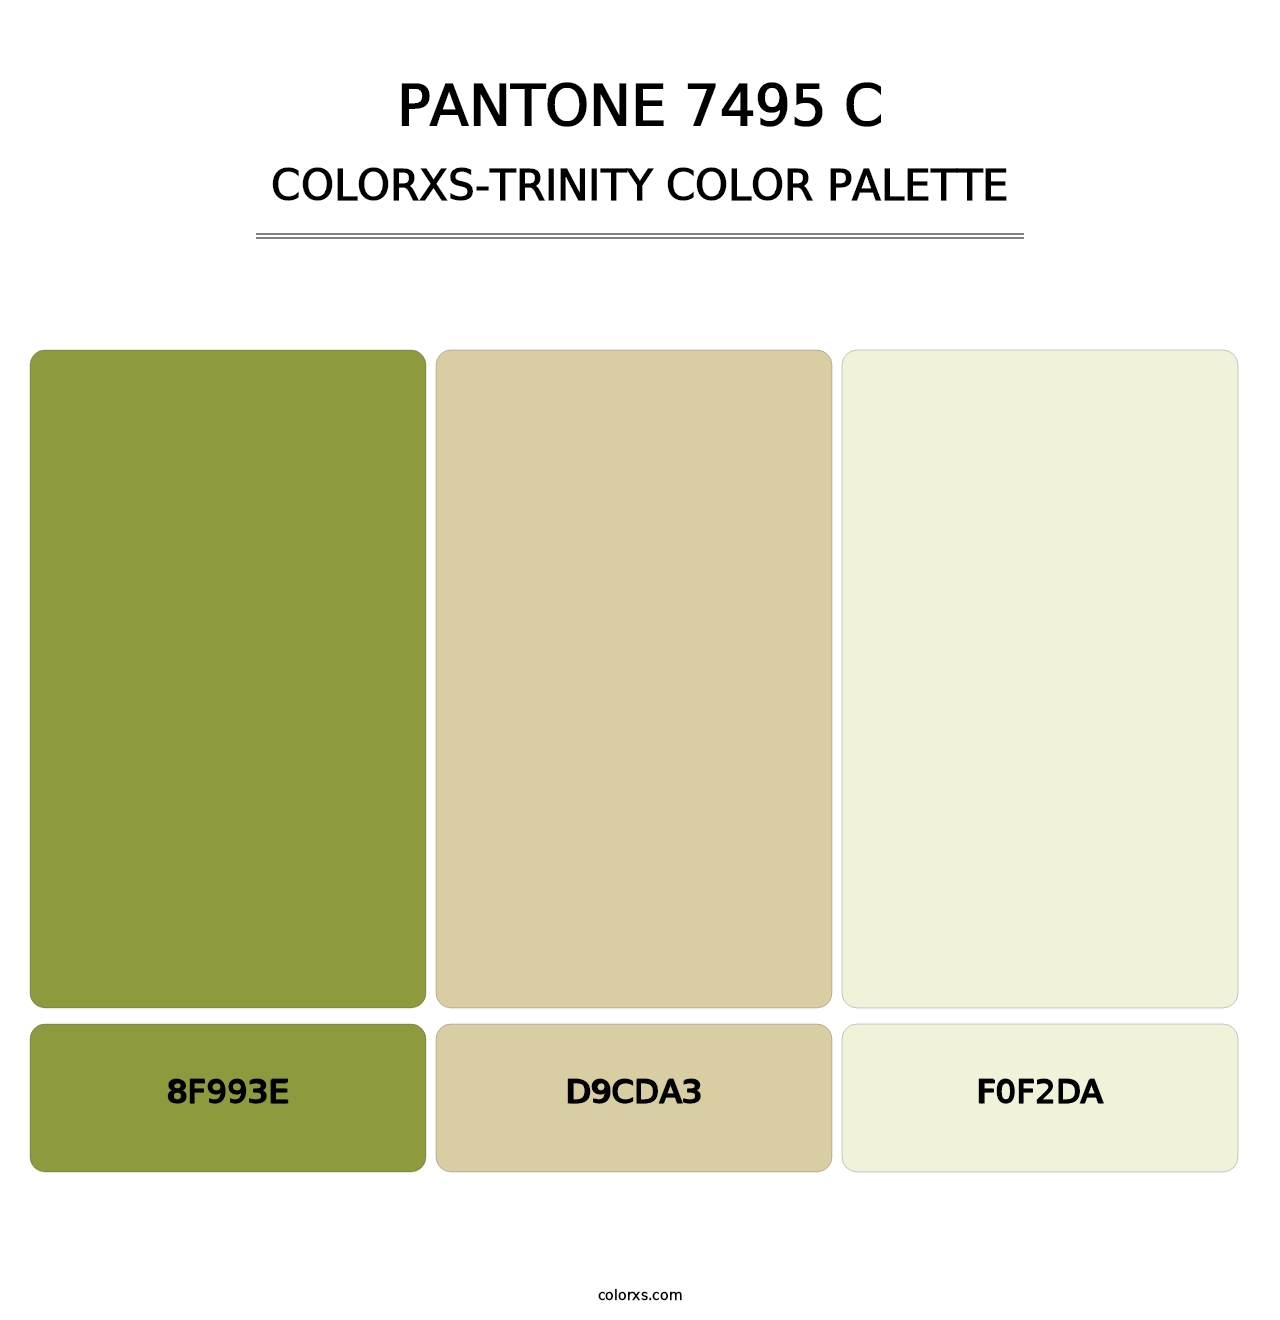 PANTONE 7495 C - Colorxs Trinity Palette